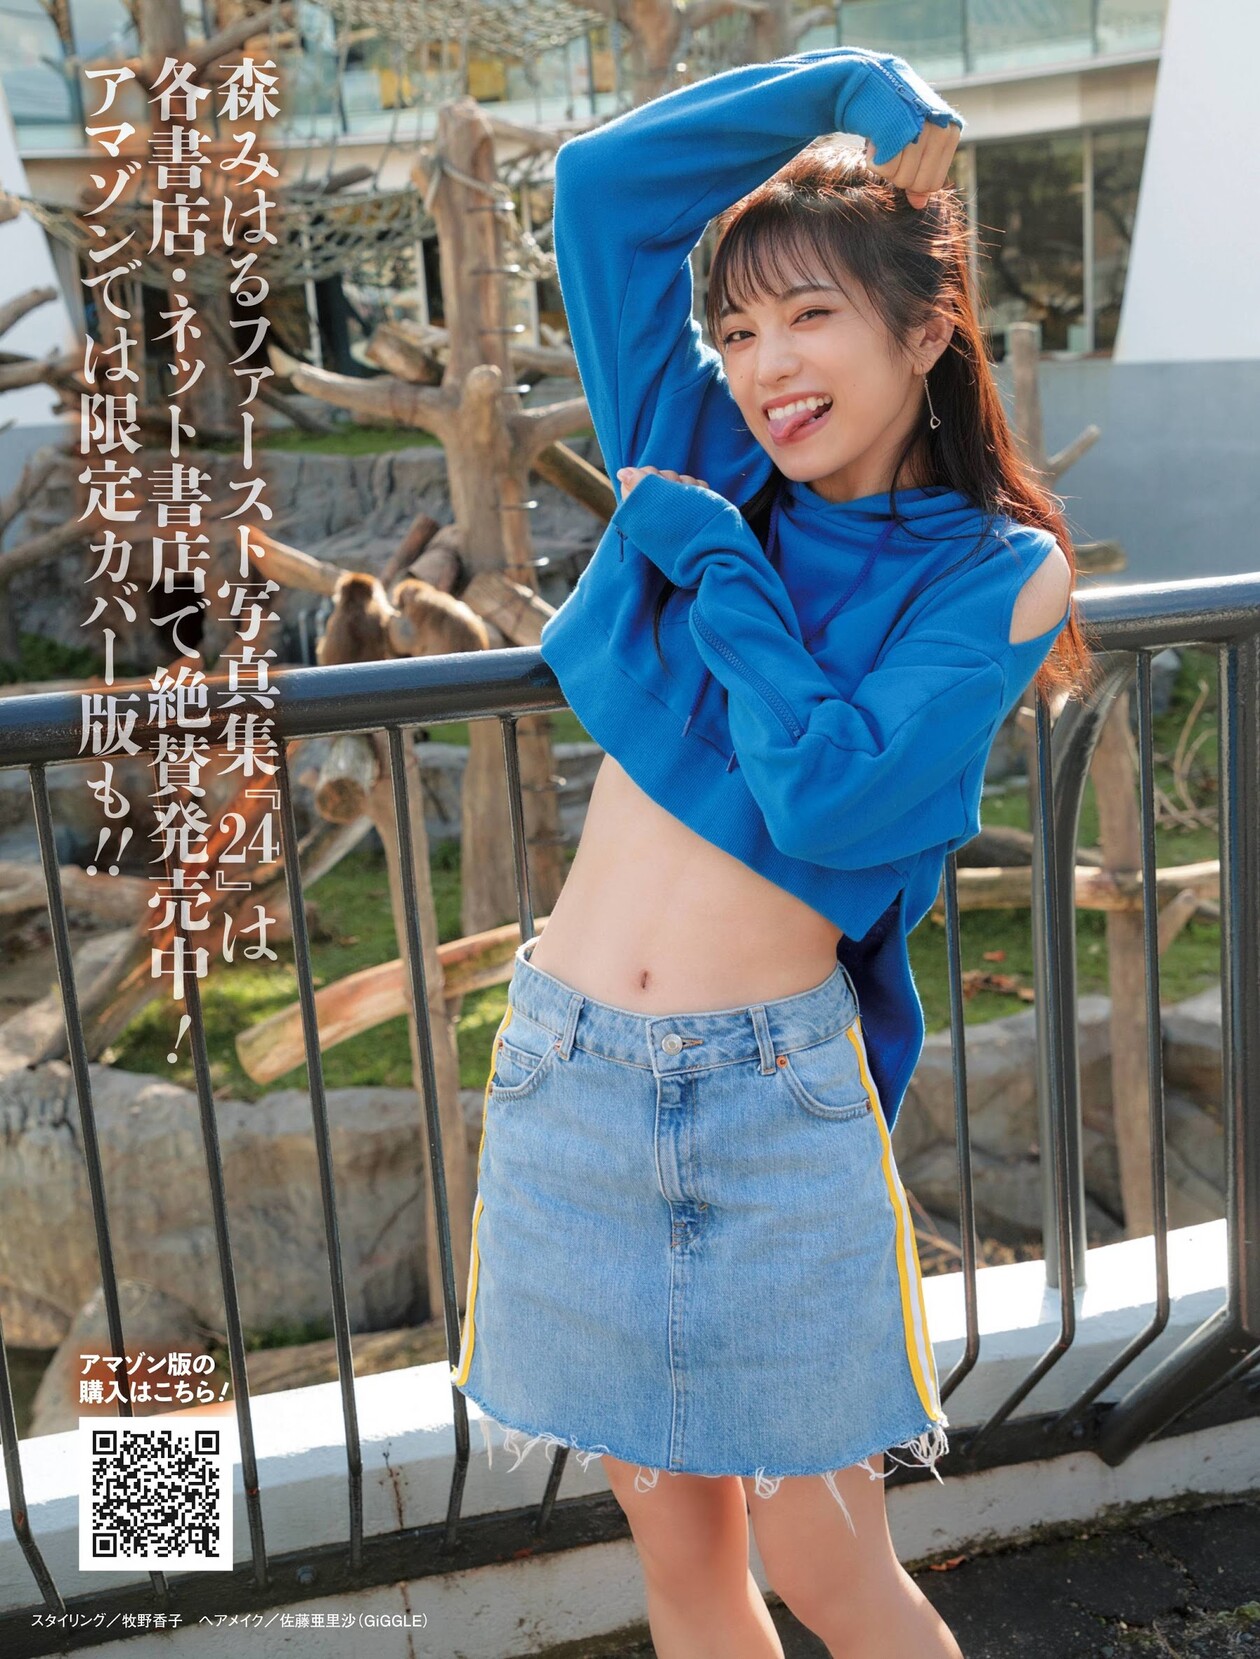 Miharu Mori 森みはる, Weekly SPA! 2021.02.16 (週刊SPA! 2021年2月16日号)